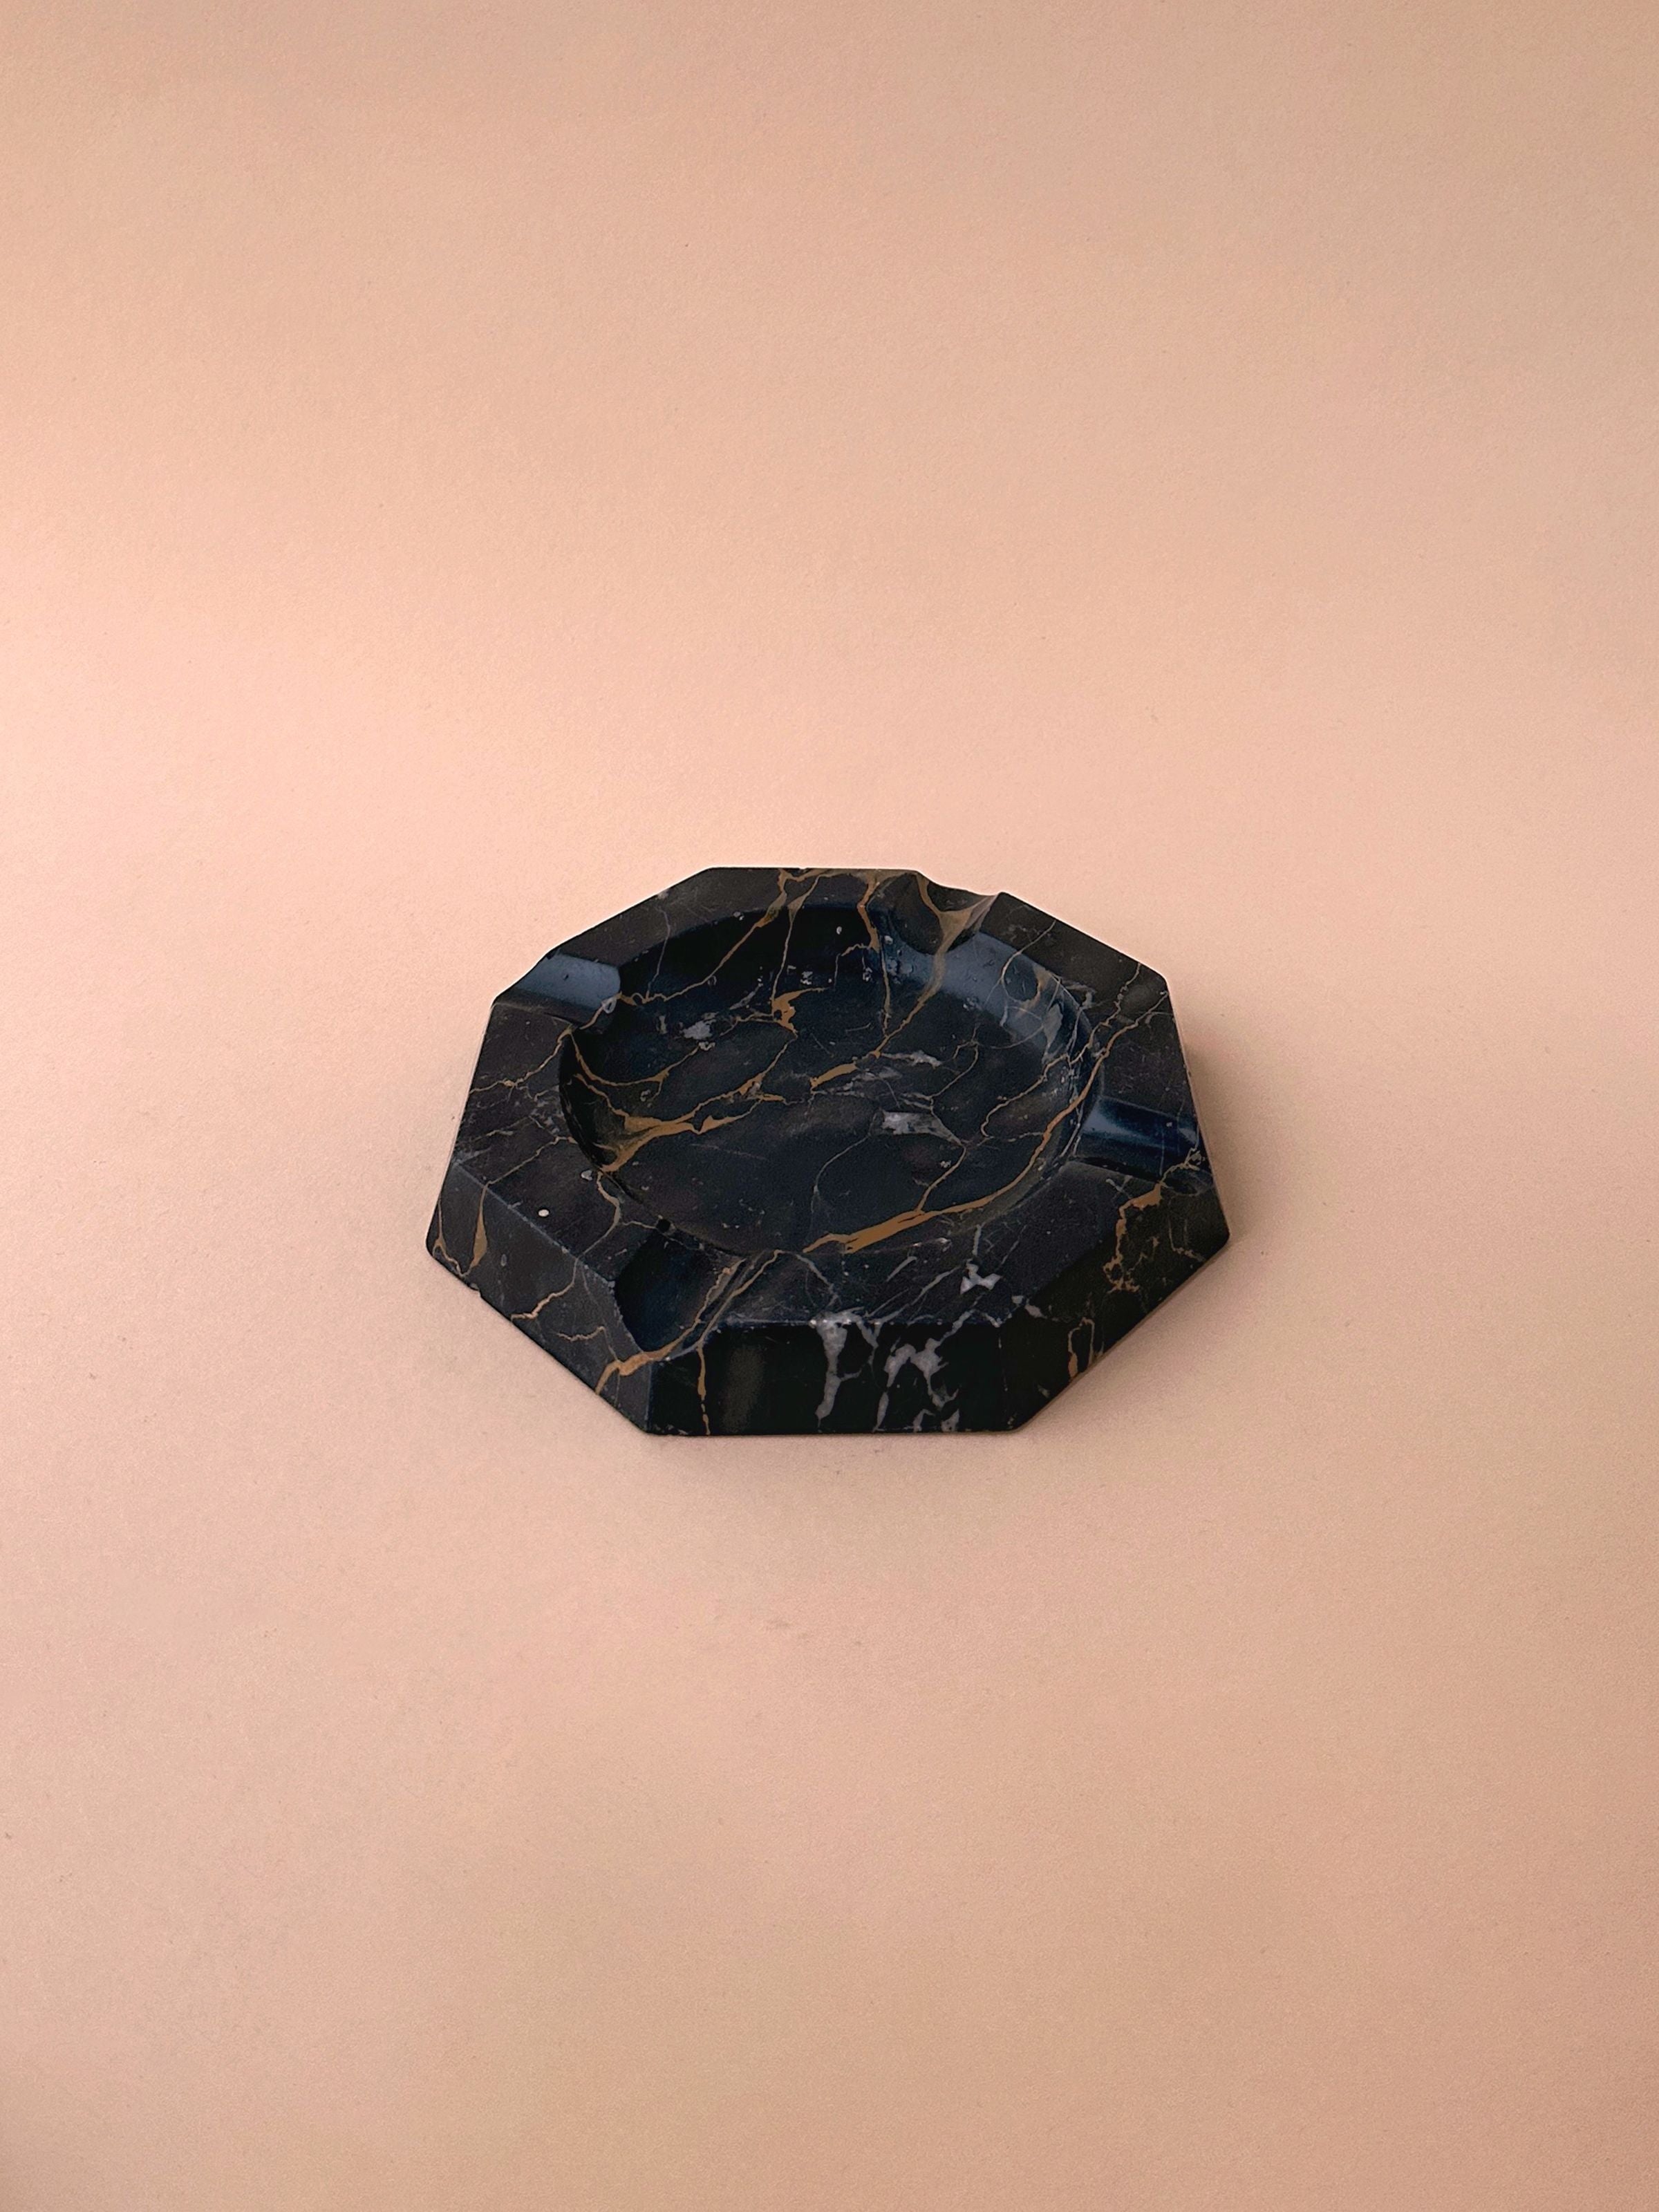 1970s Black Marble Ashtray Octagonal Shape